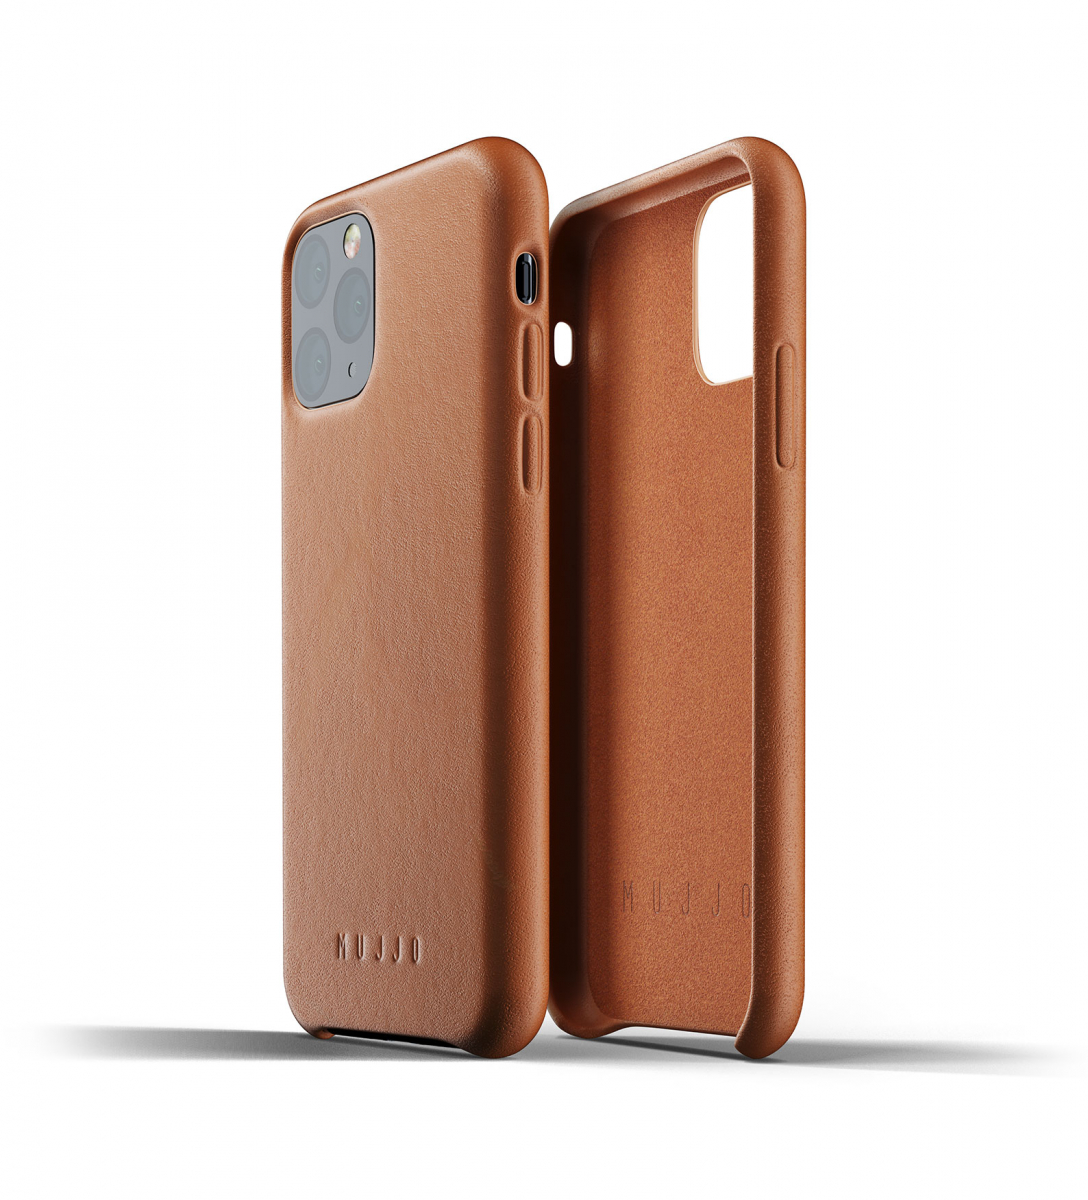 Чехол кожаный MUJJO для iPhone 11 Pro Full Leather, Tan